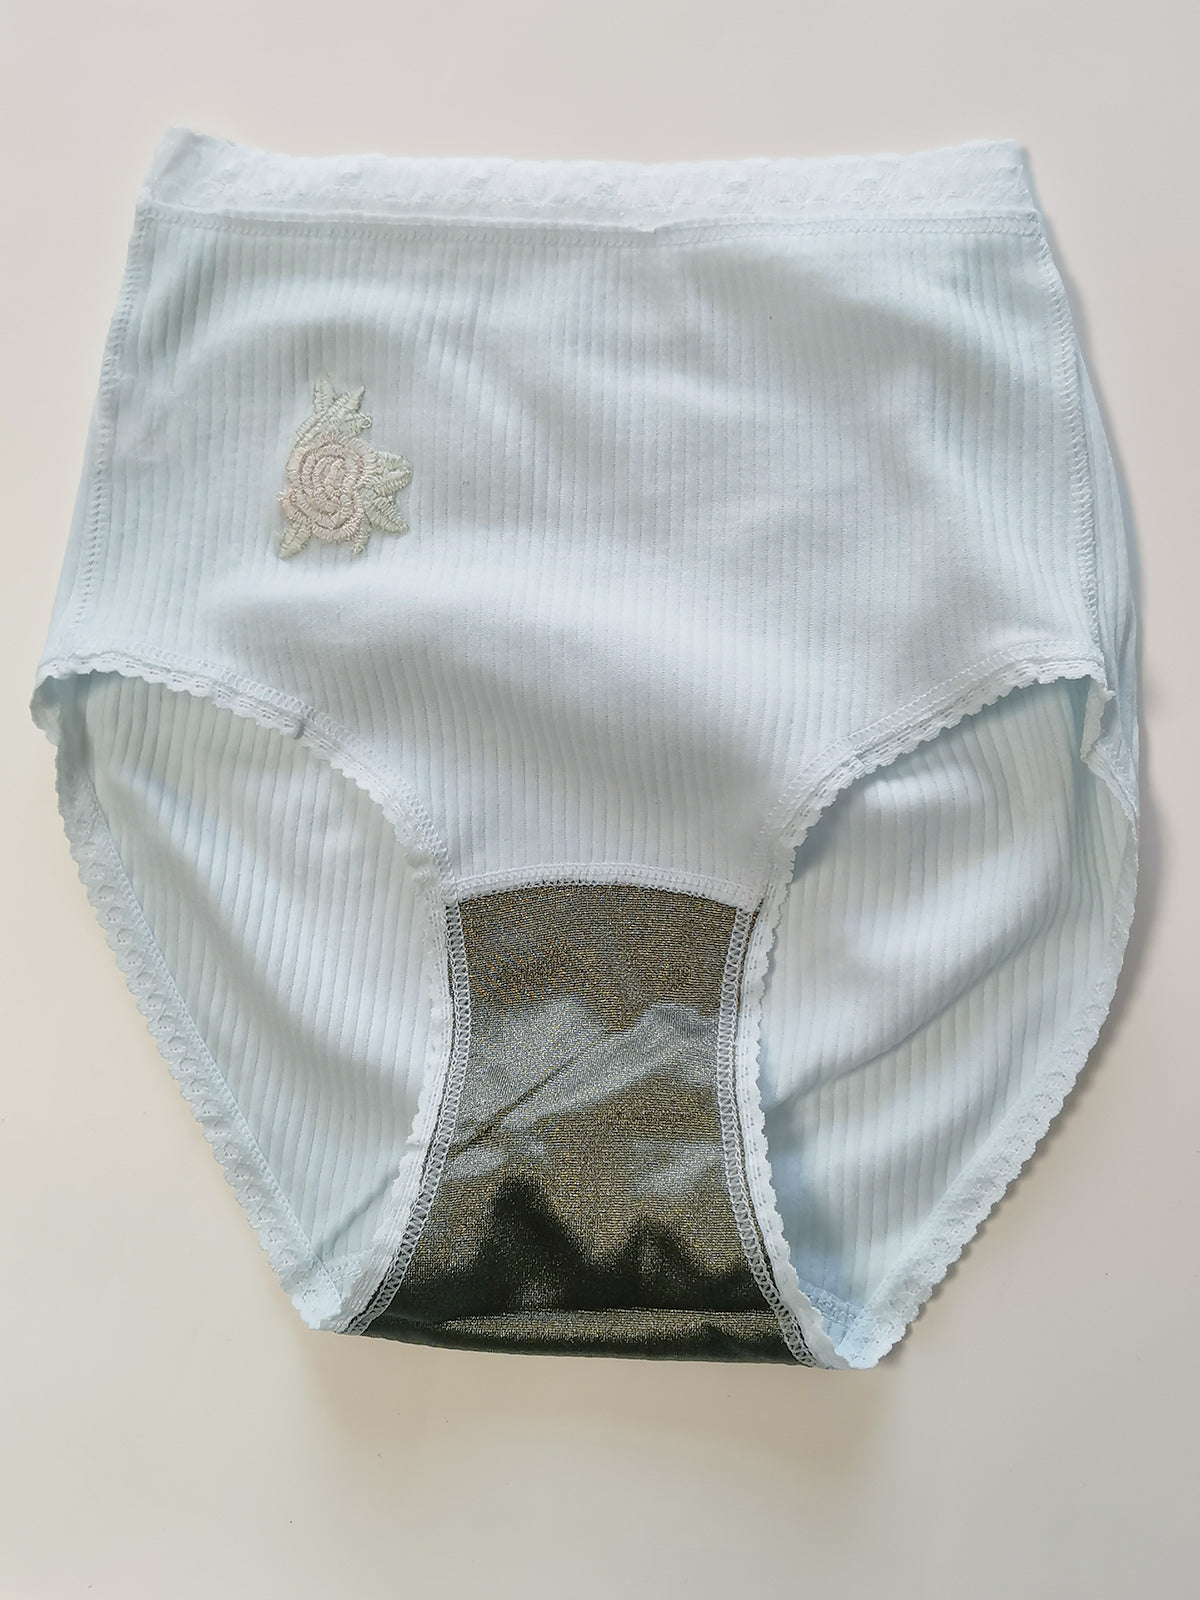 Women Undershorts Briefs-Anti-Radiation EMF Protection Shorts Pants Silver Fiber